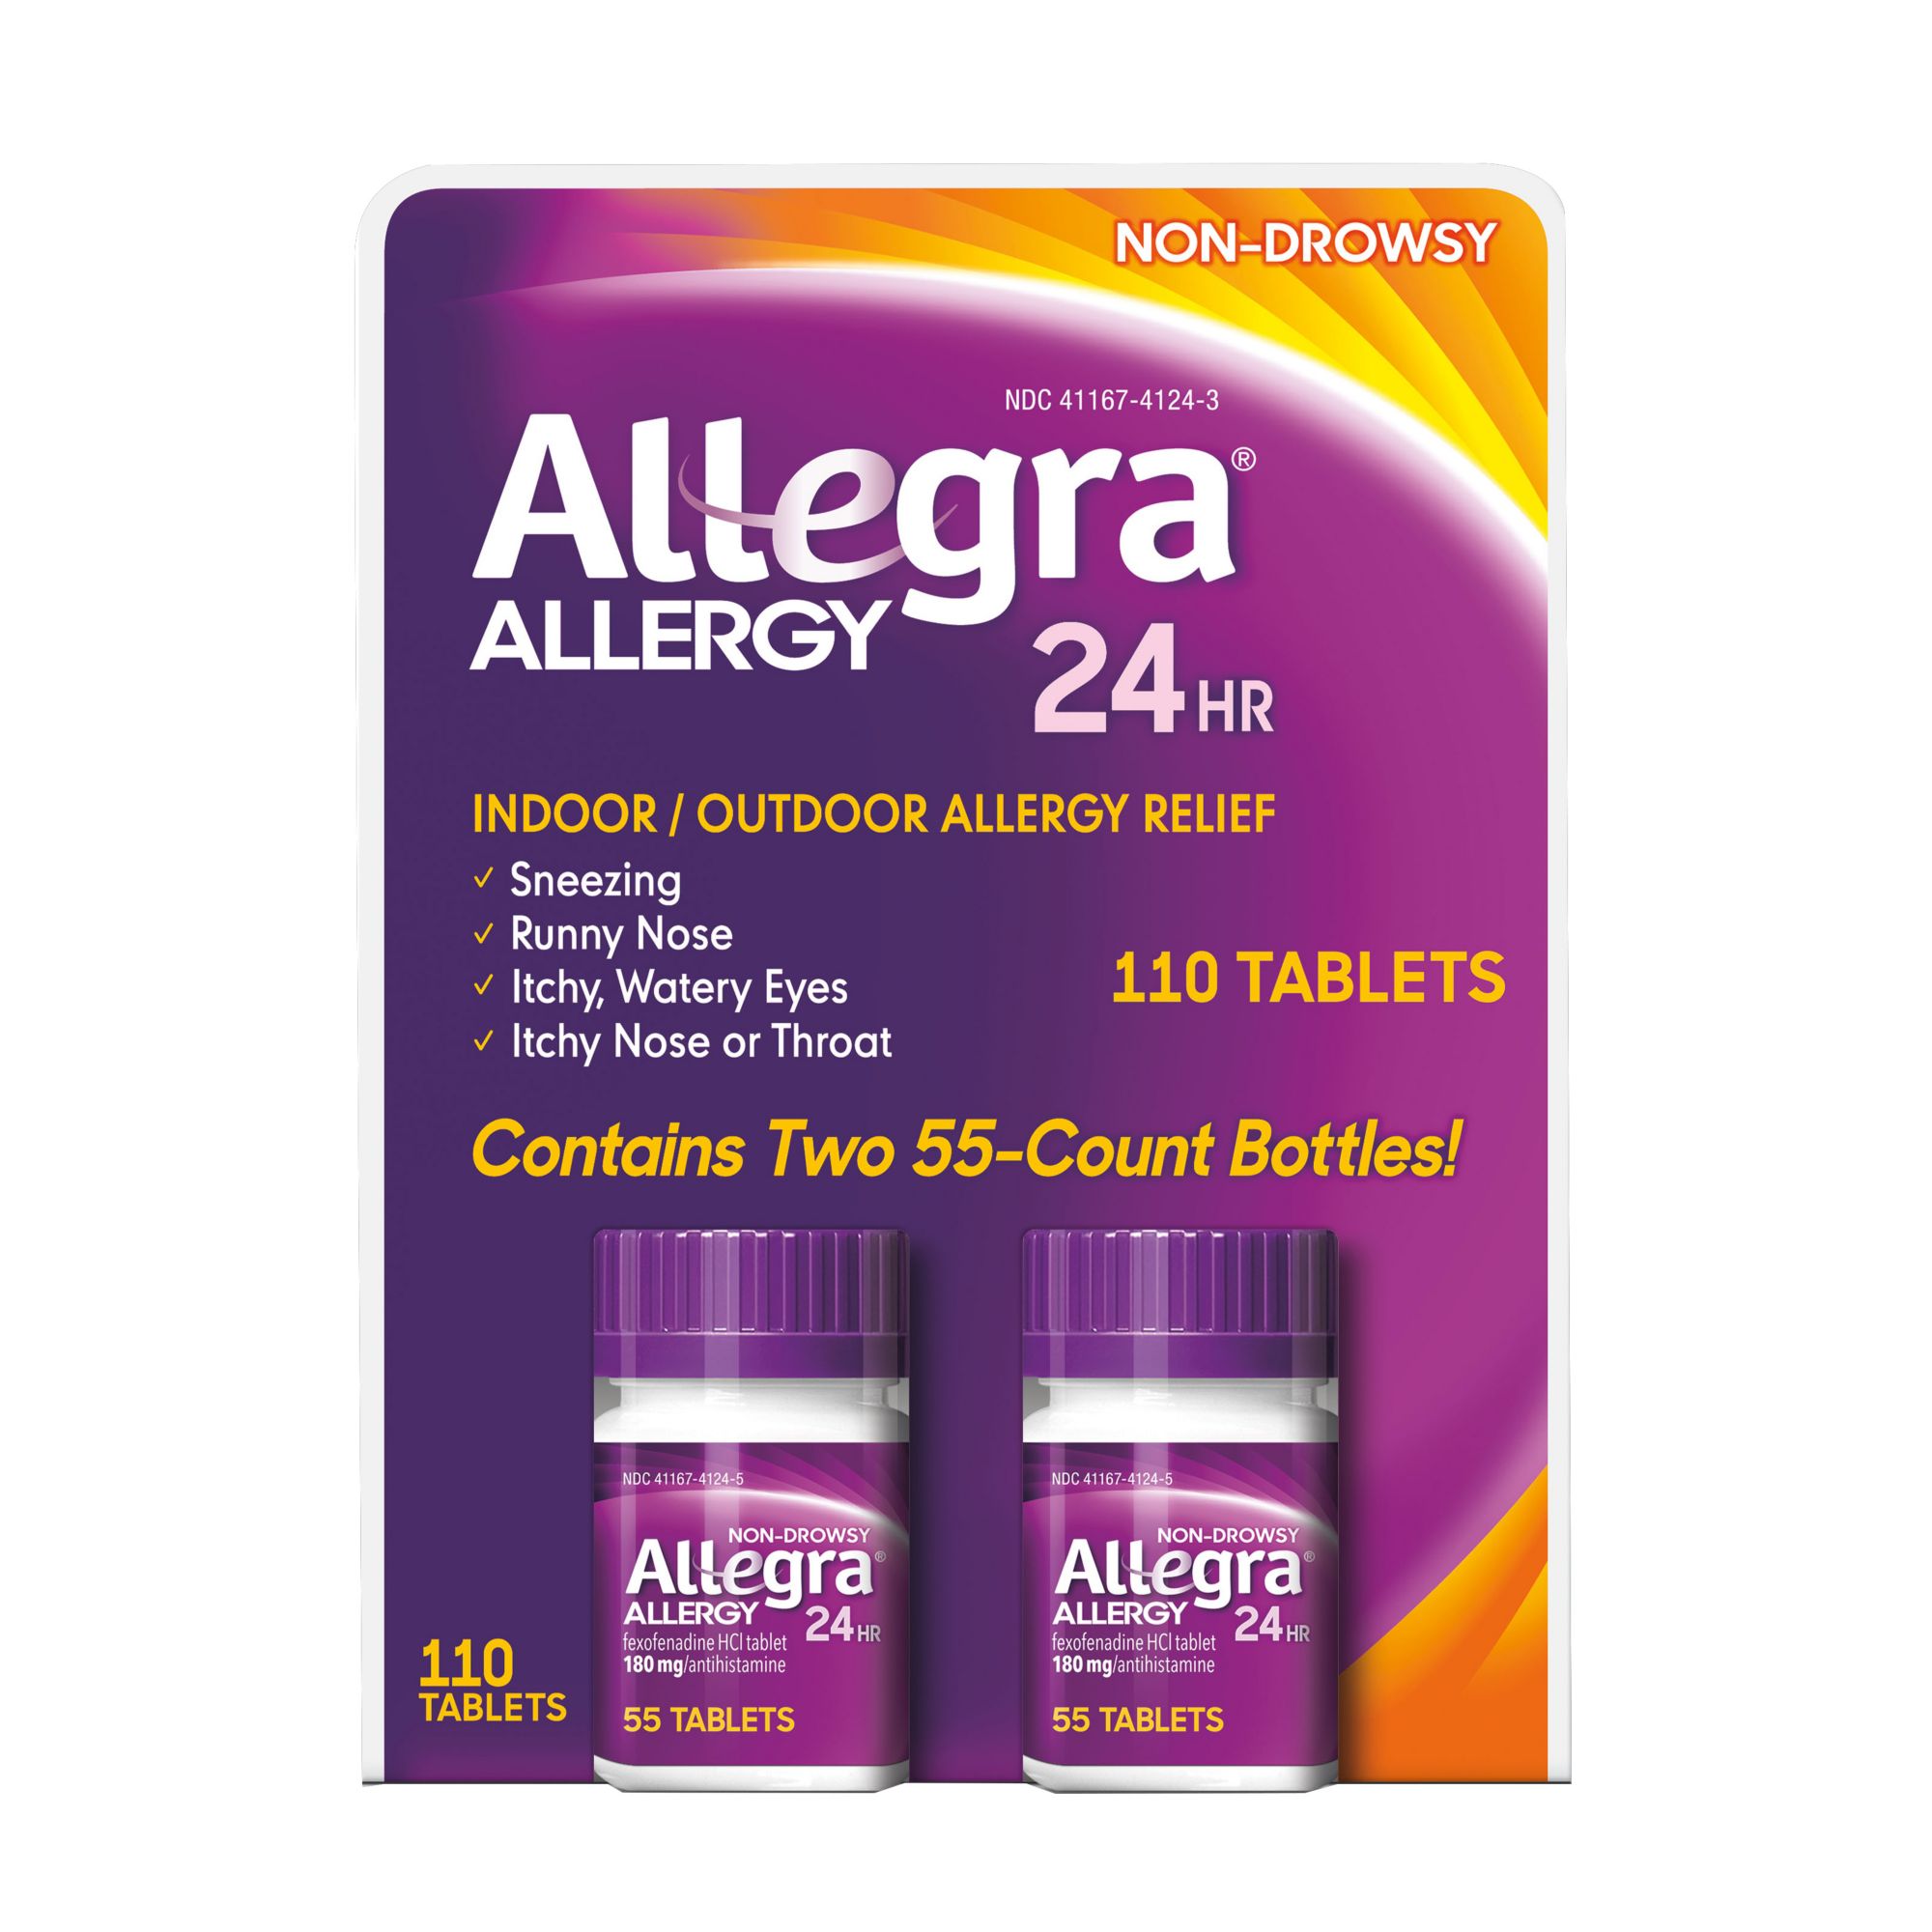 Allegra Allergy Non-Drowsy Tablets, 110 ct.